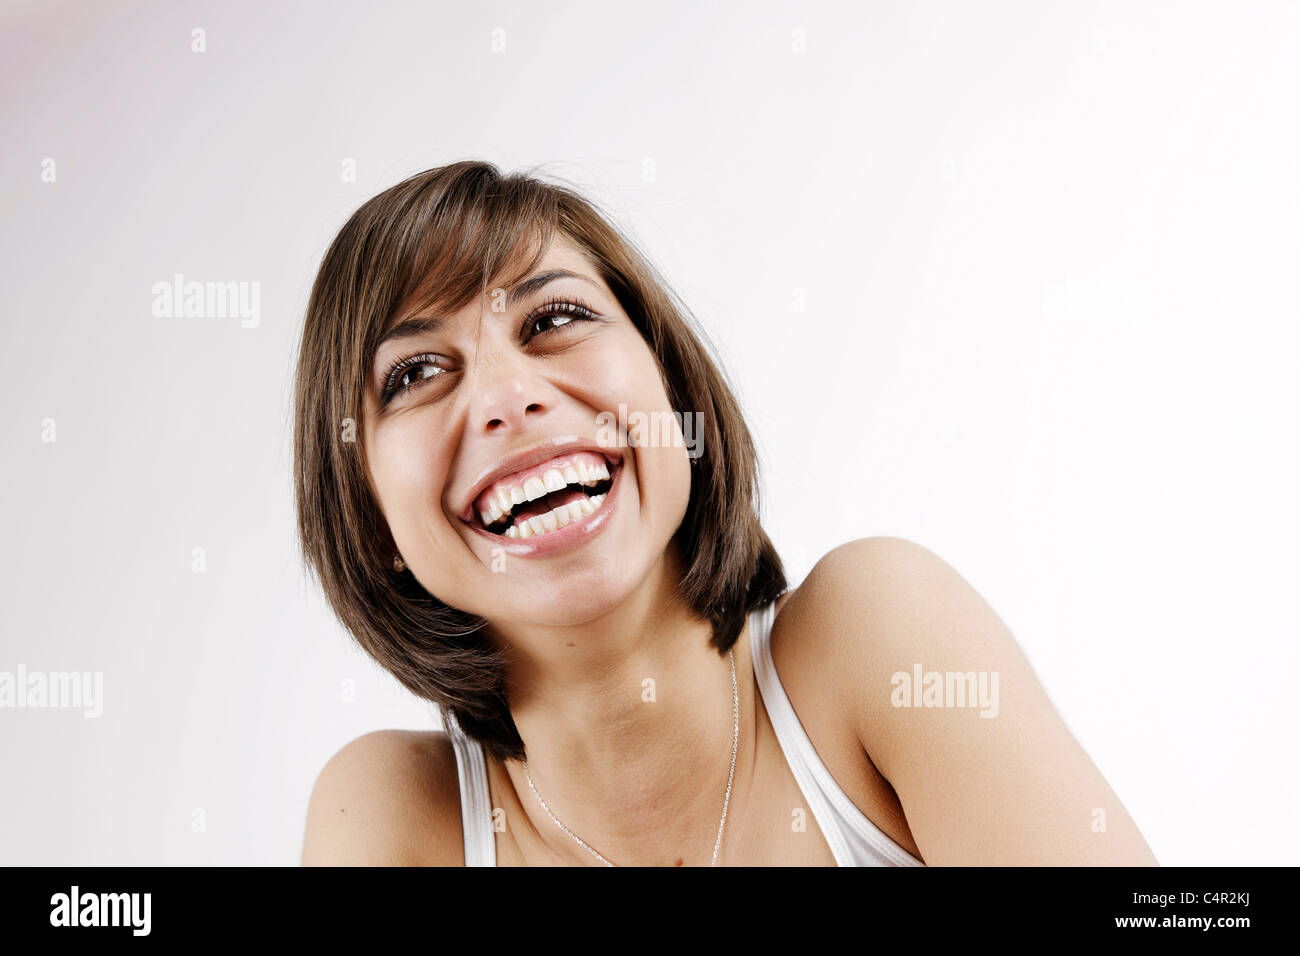 Giovane donna bruna, 25 anni, ridendo, divertendosi, piena di gioia - Junge Frau, braunhaarig, 25, lacht, lachend, Spaß, Freude Foto Stock